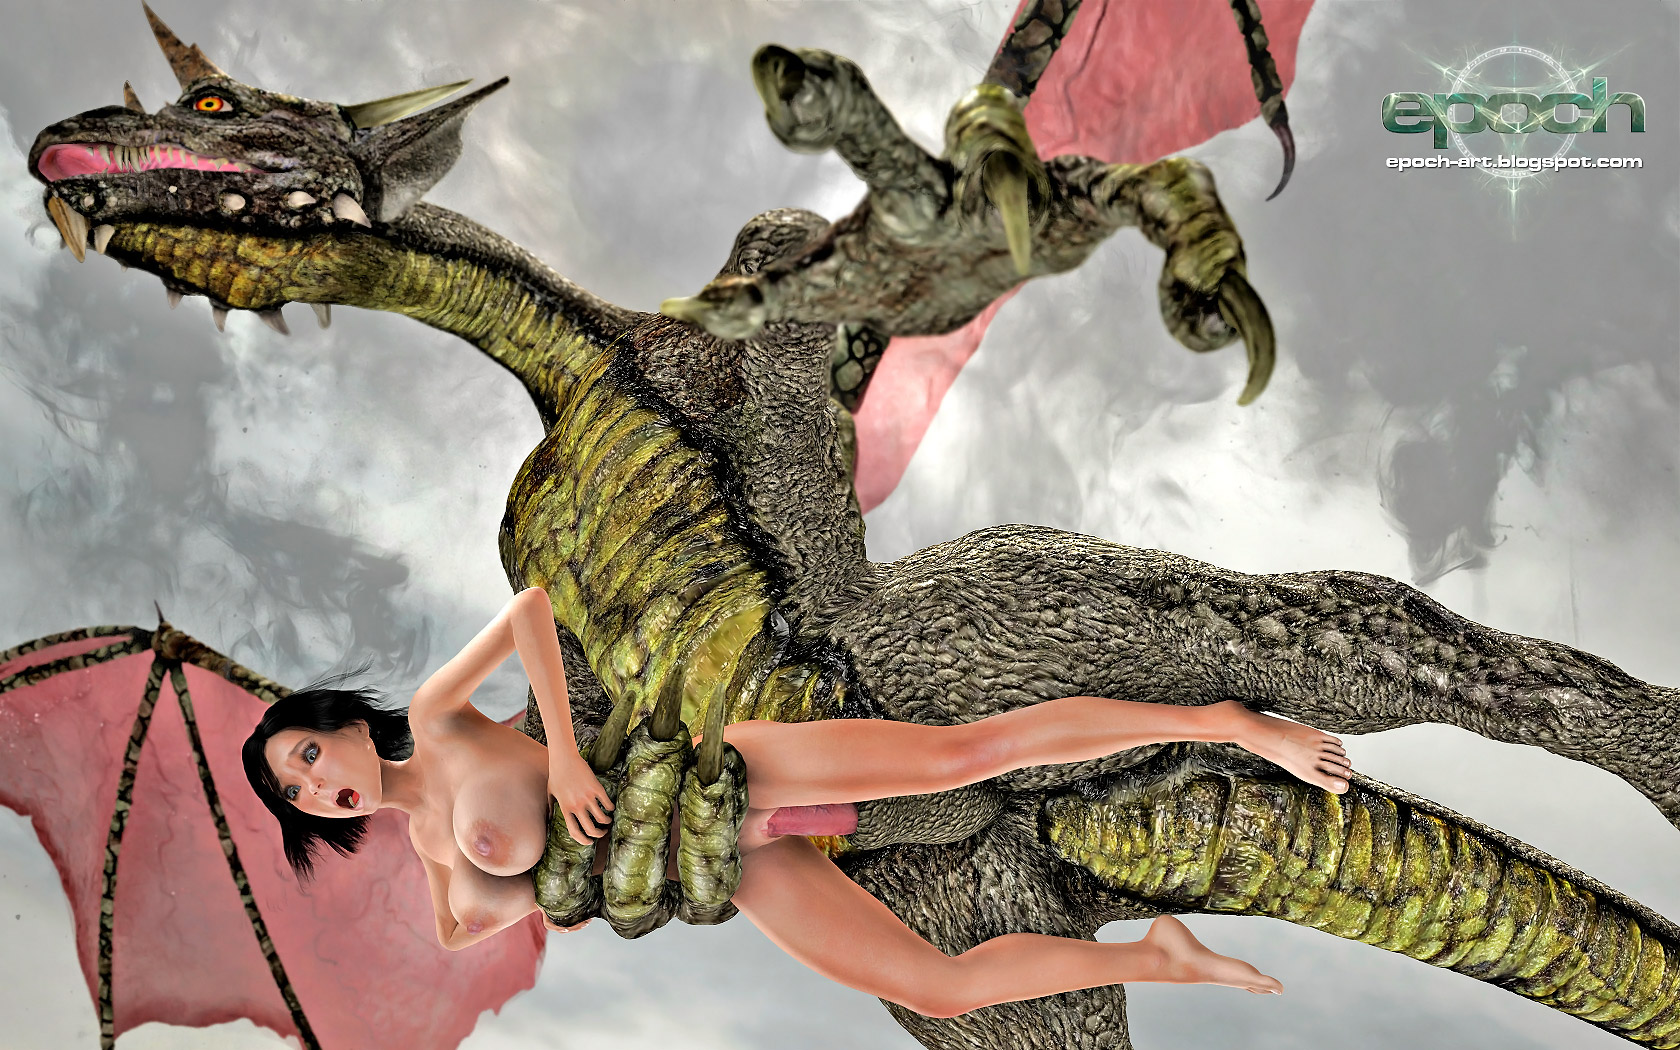 Porn 3d Erotic Fantasy Art Dragons - Hottest selection of hd monster porn with brutal deep dicking |  3dwerewolfporn.com